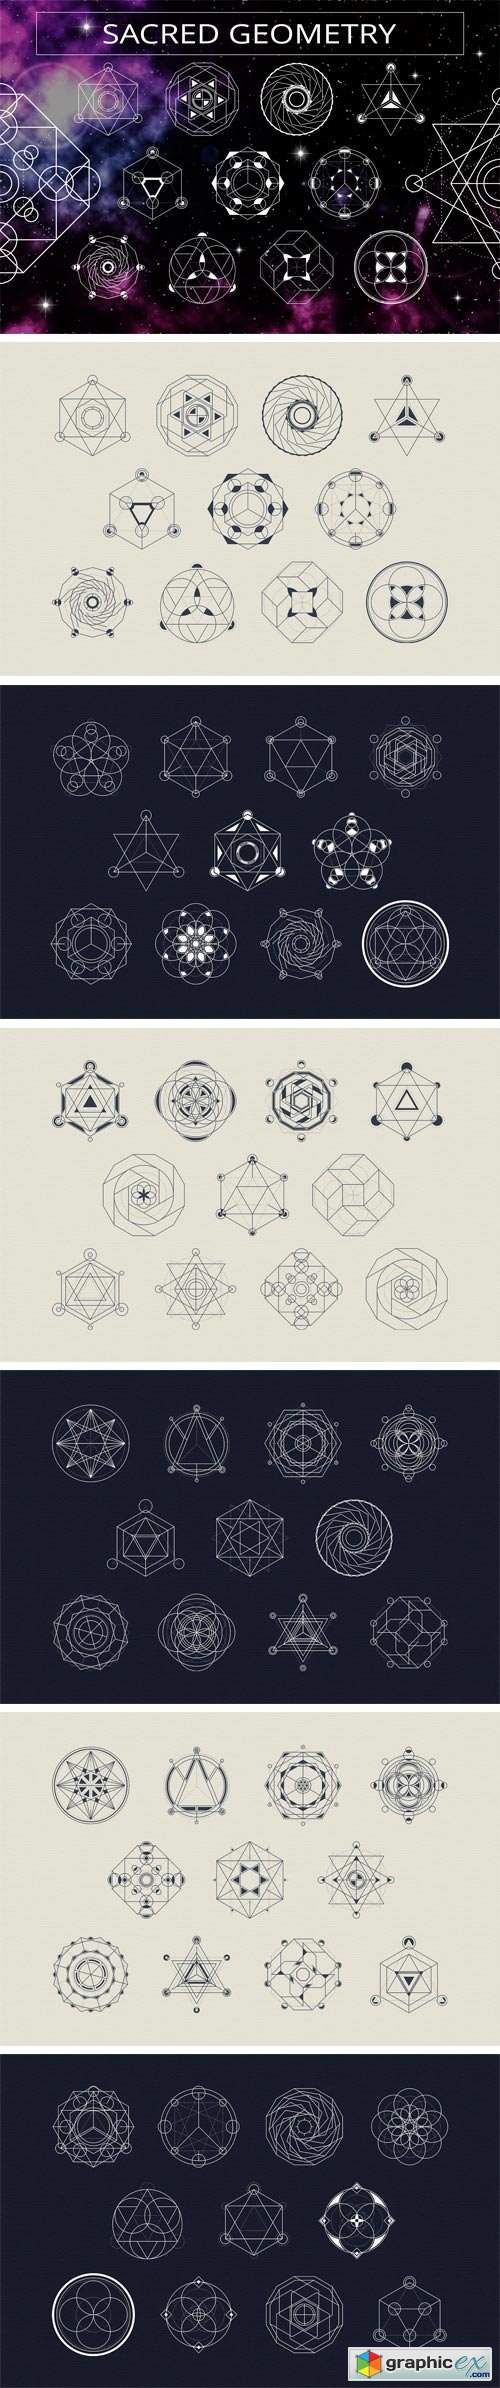 Sacred Geometry Bundle